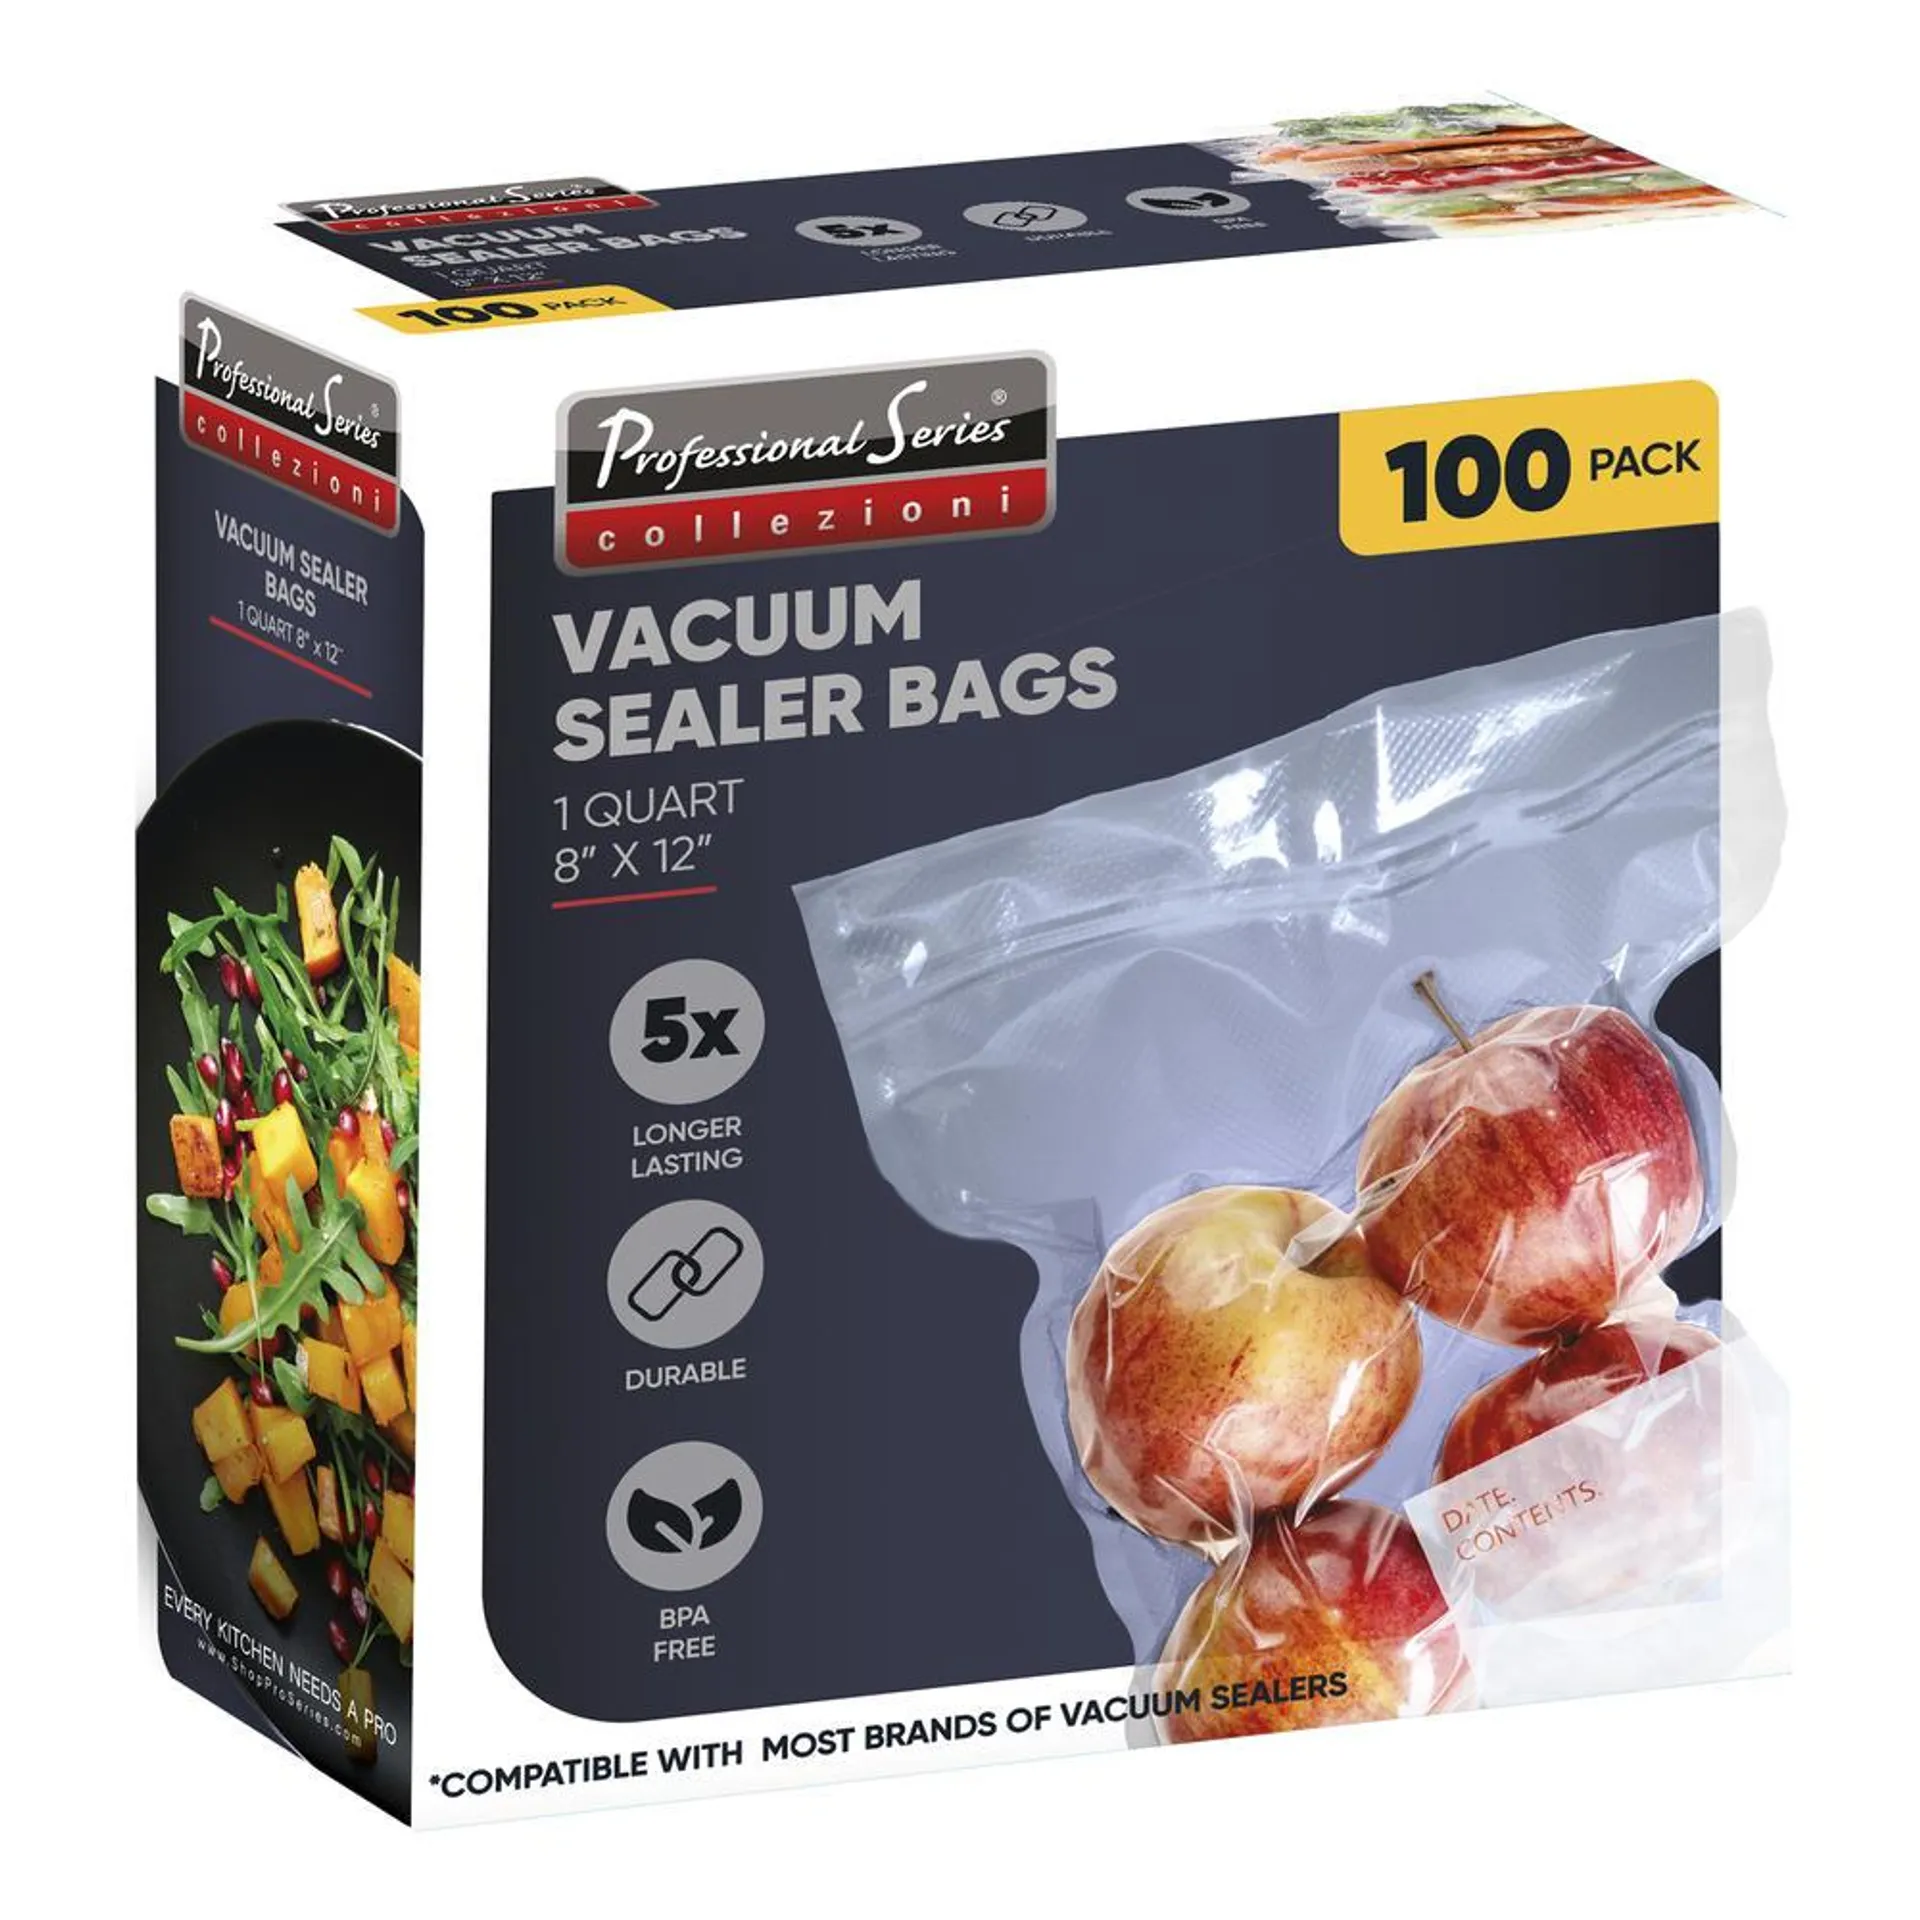 8" x 12" Quart Vacuum Sealer Bags - 100 pack